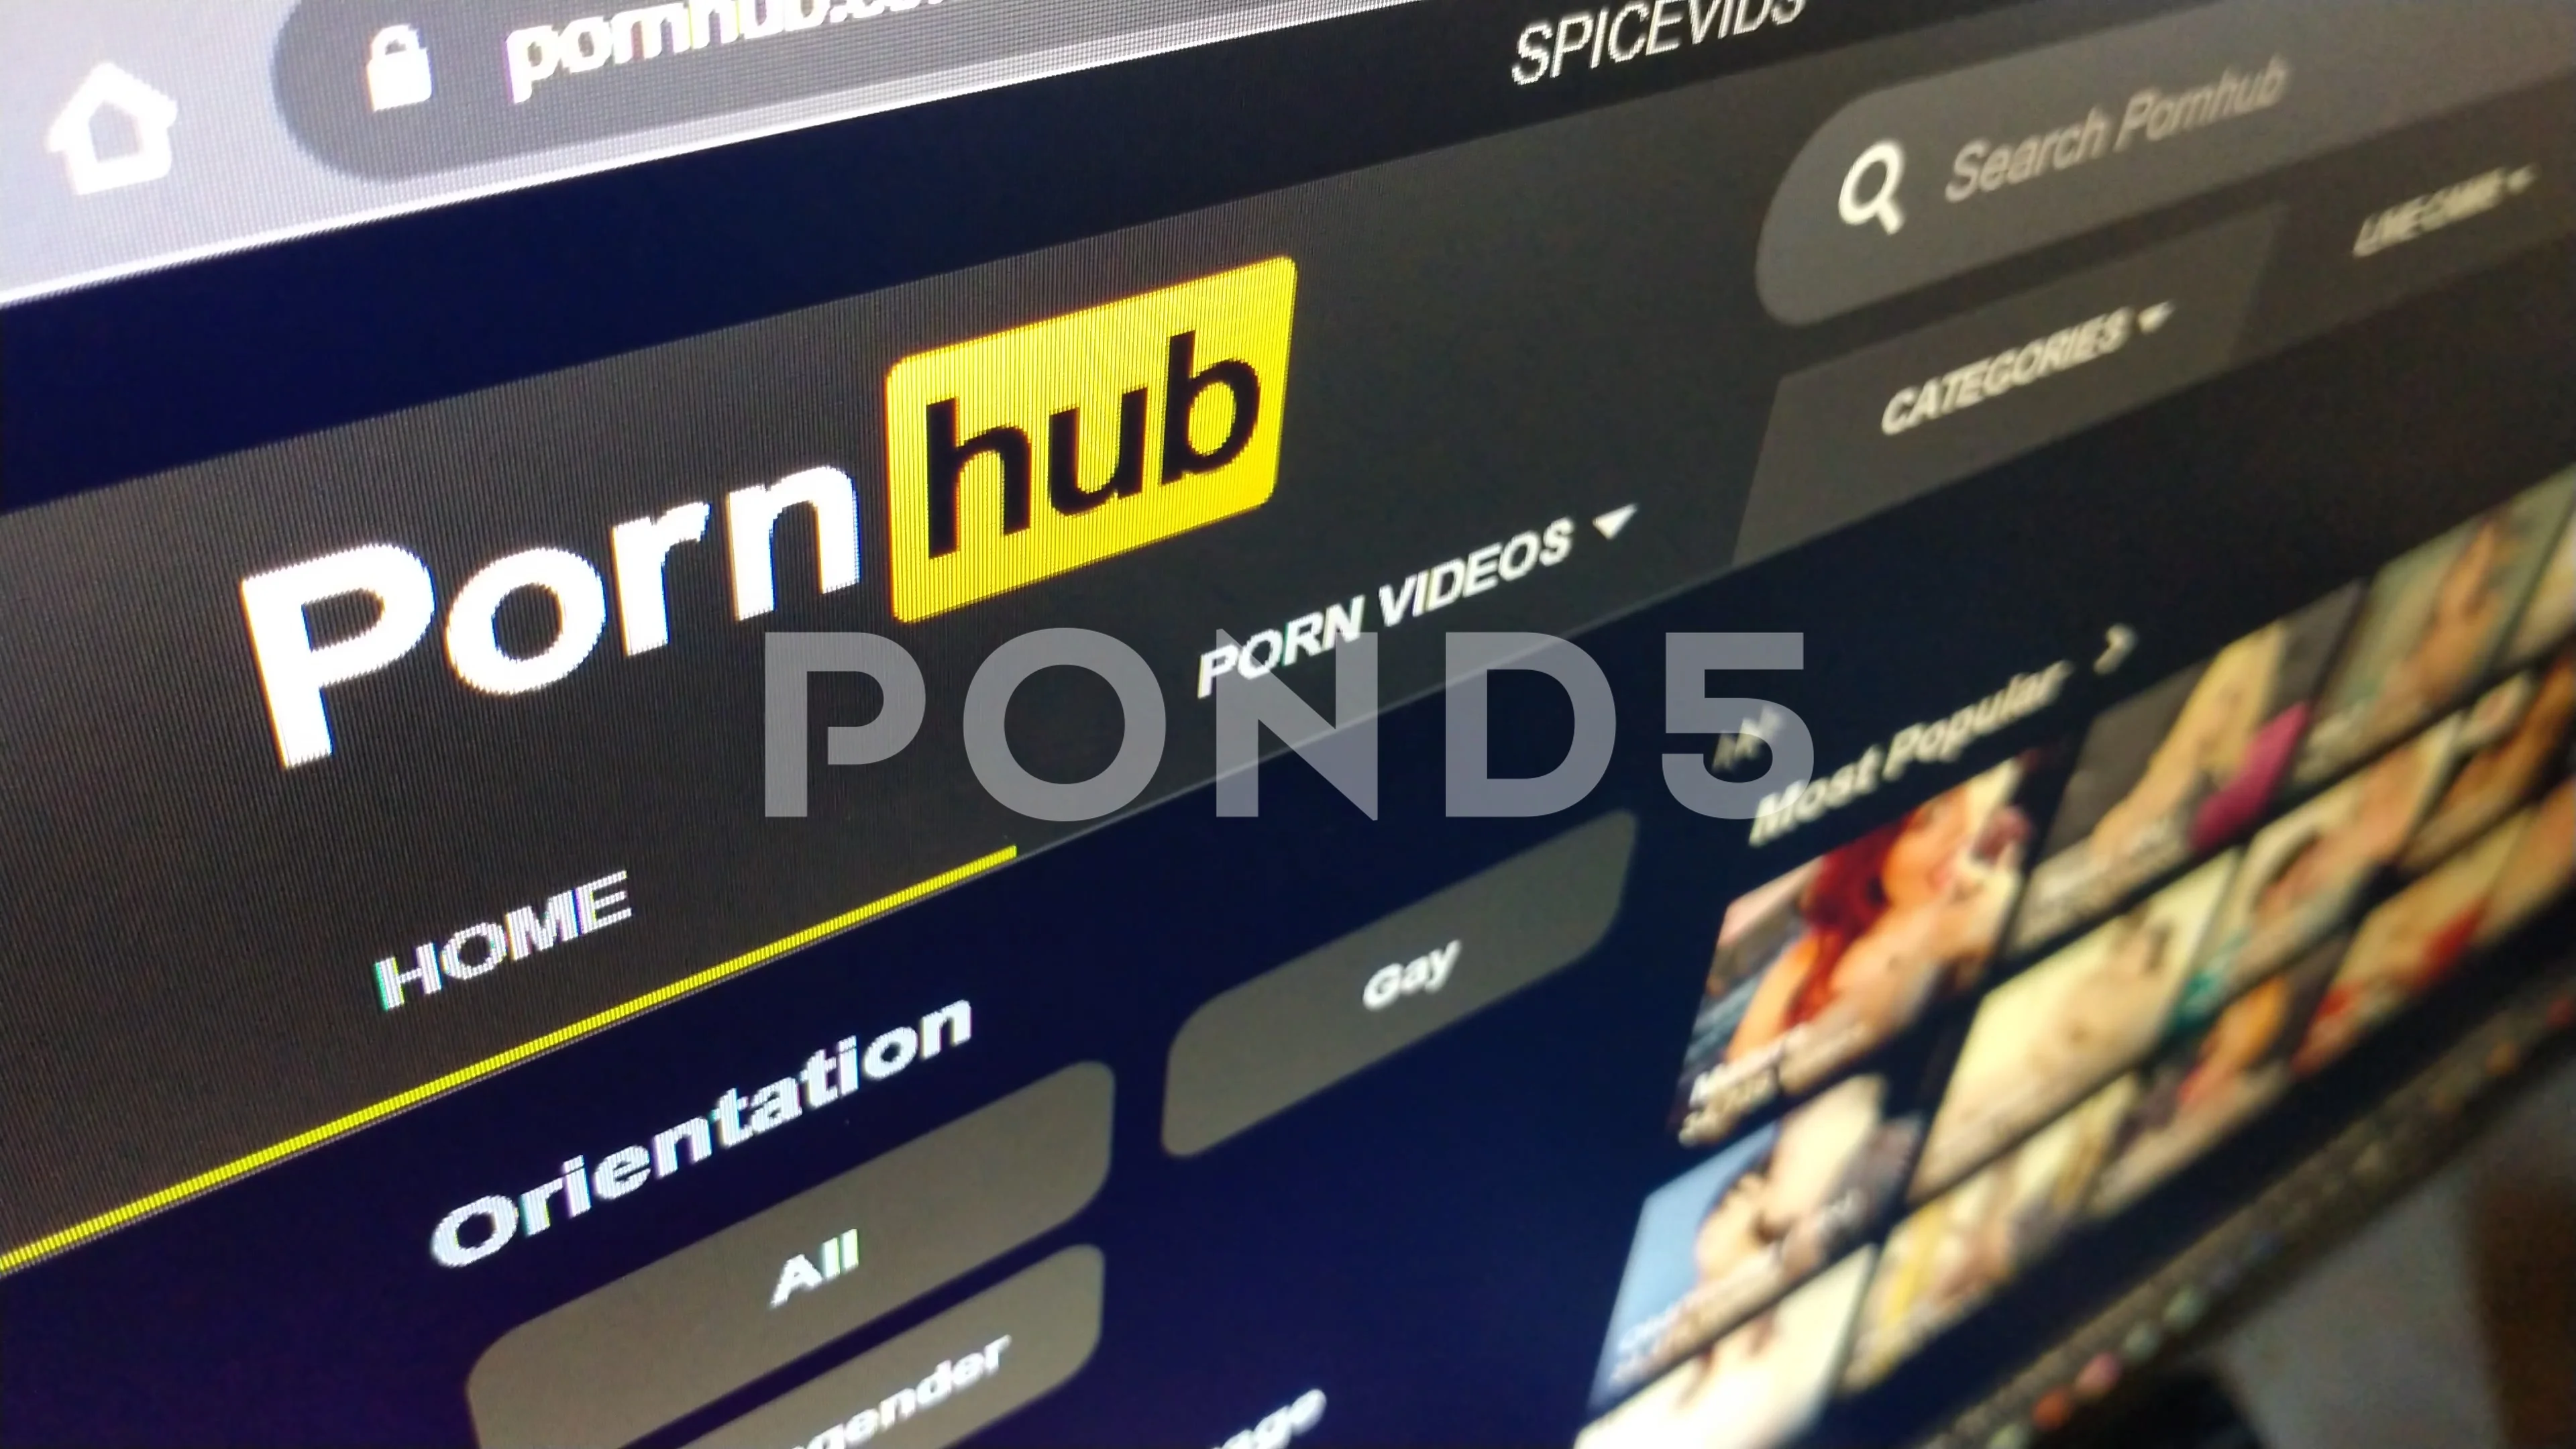 Sex Video Software - porn hub erotic video platform. pornhub ... | Stock Video | Pond5